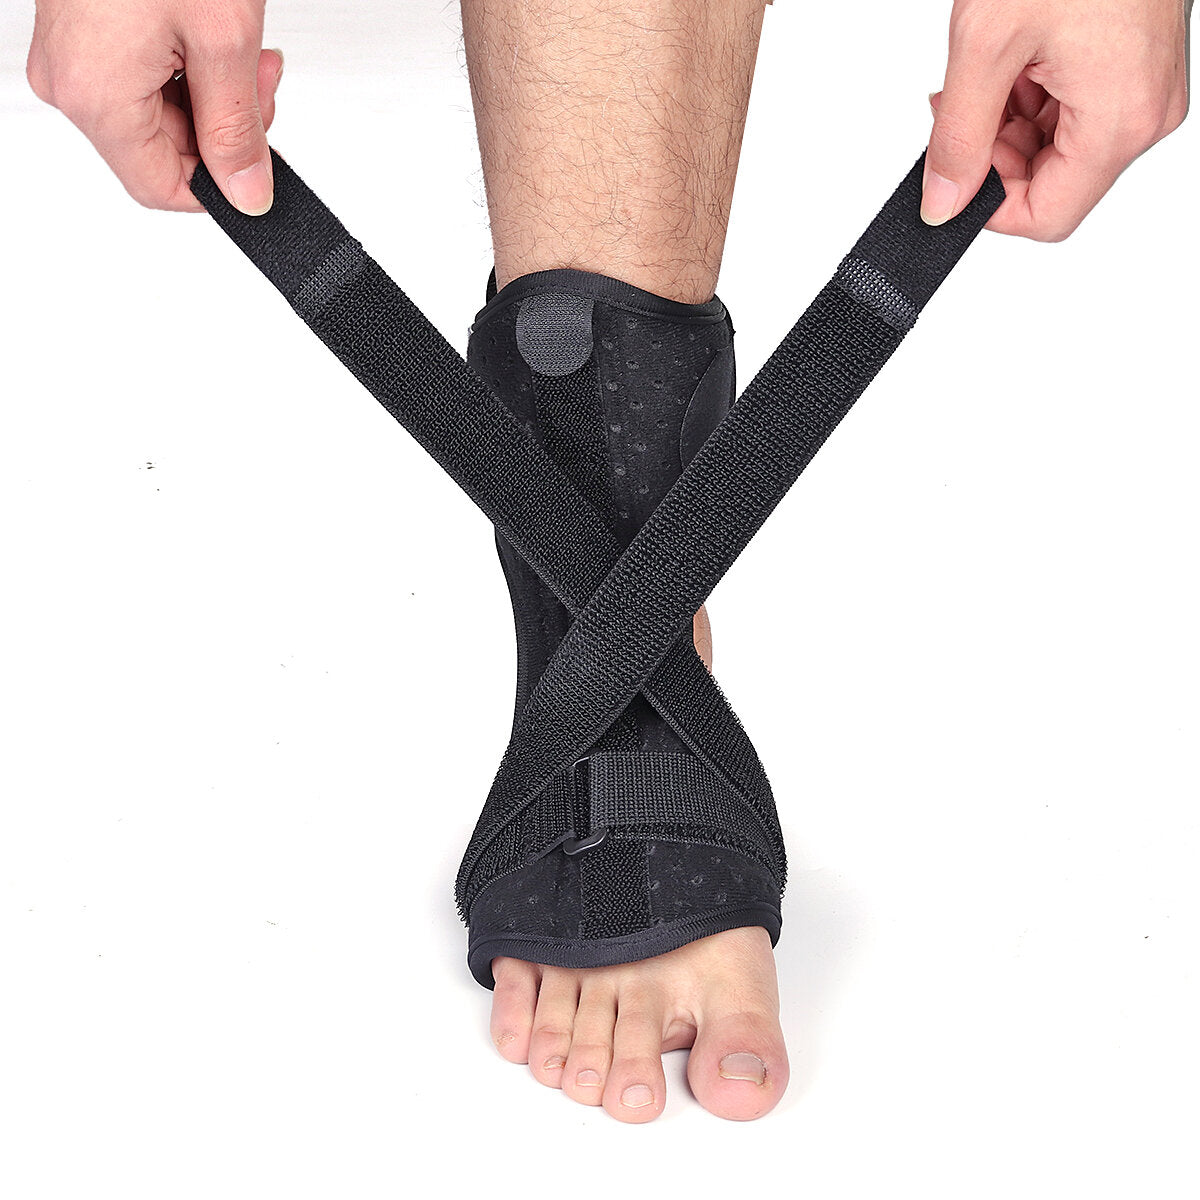 Dorsal Plantar Fasciitis Brace Ankle Support Tendonitis Night Splint Heel + Massage Ball